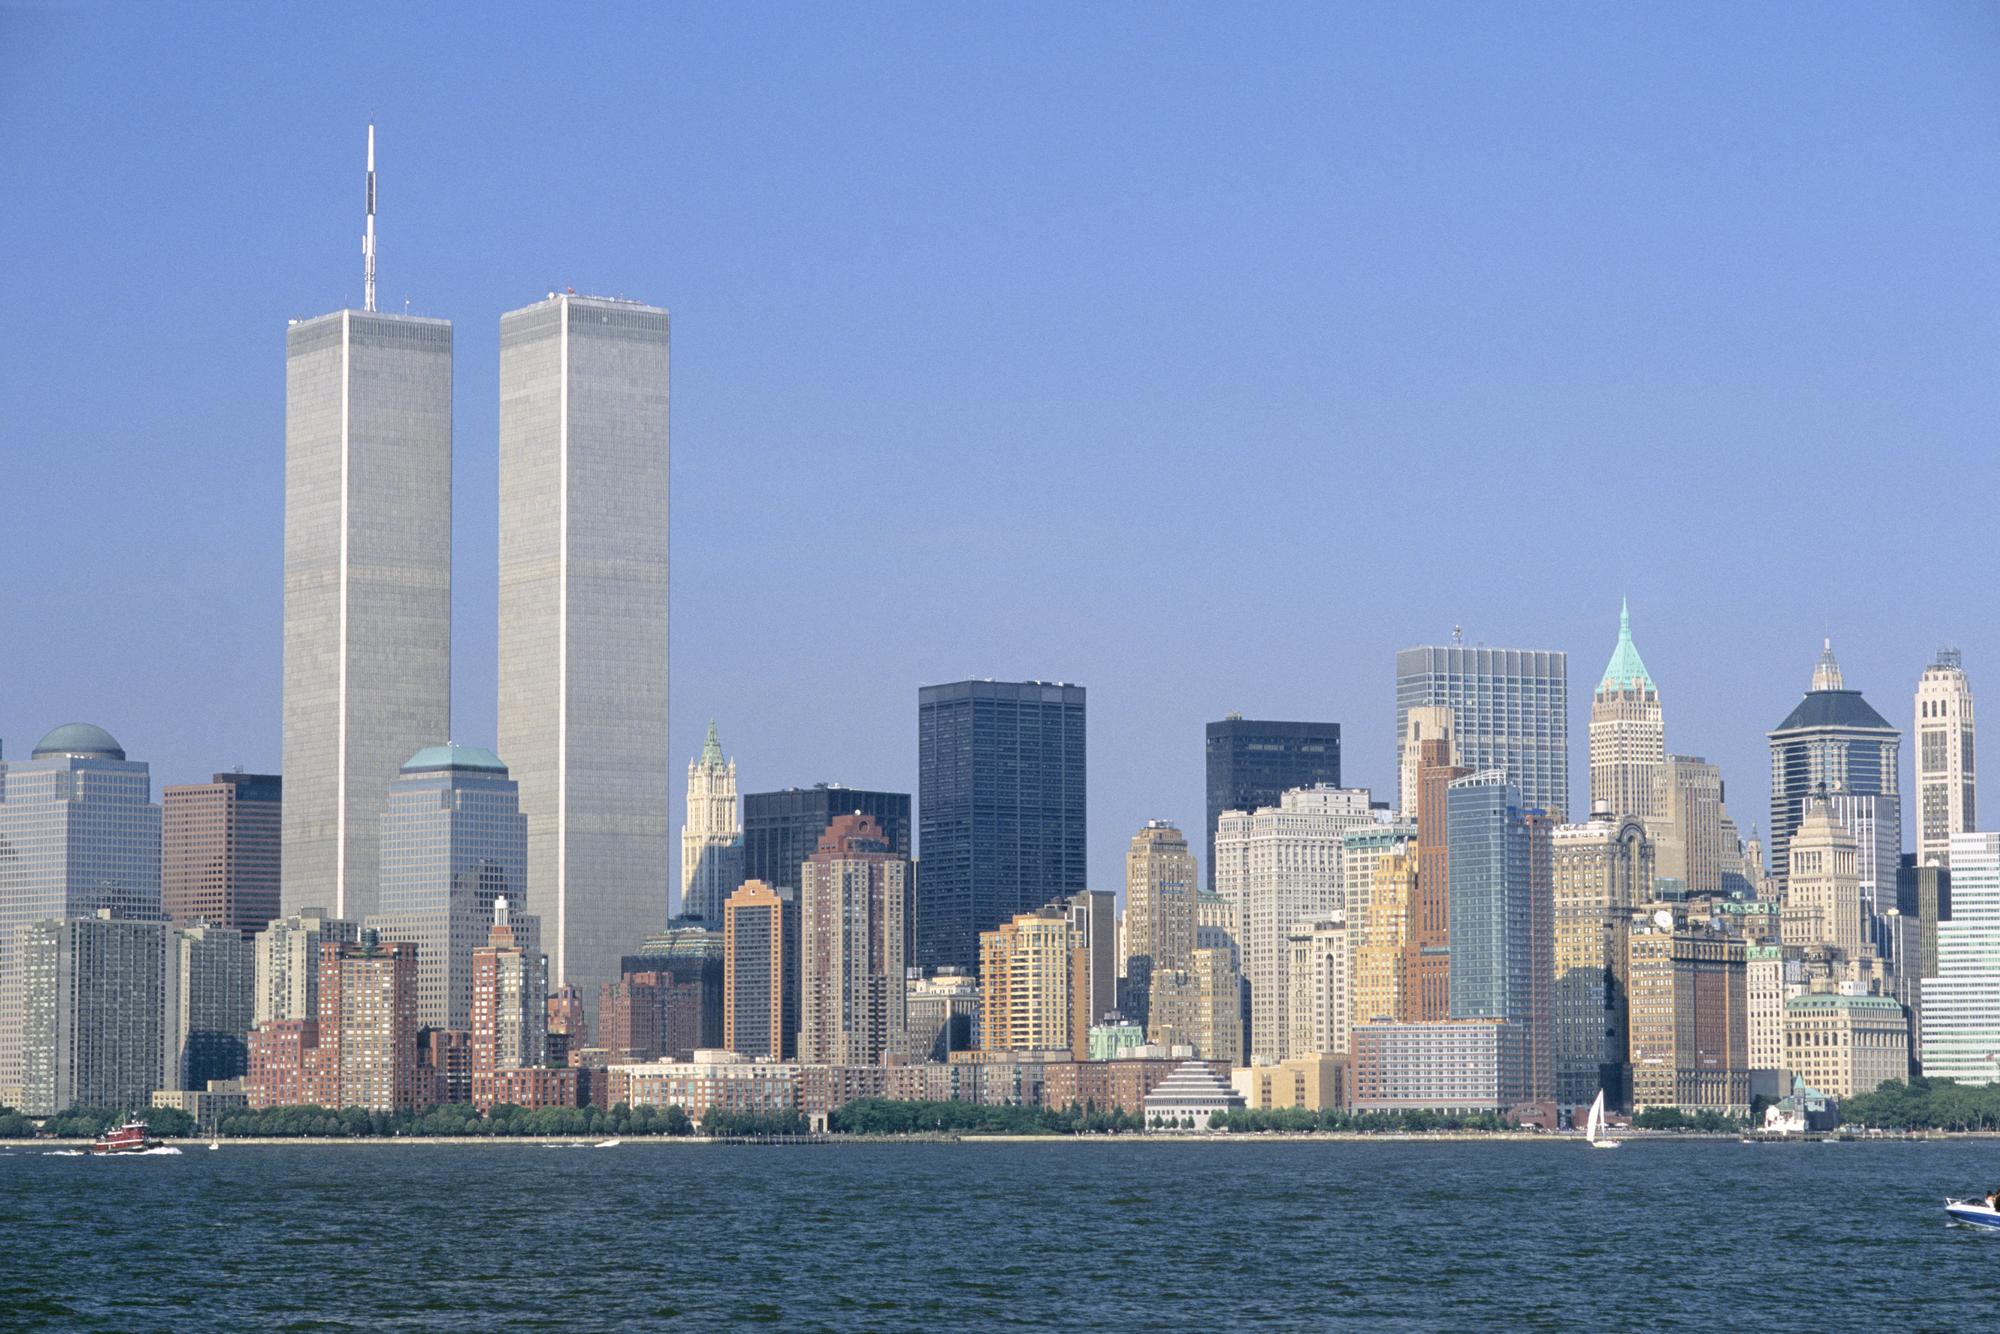 La skyline de New York avant les attentats. [Hemis via afp - Soberka Richard]